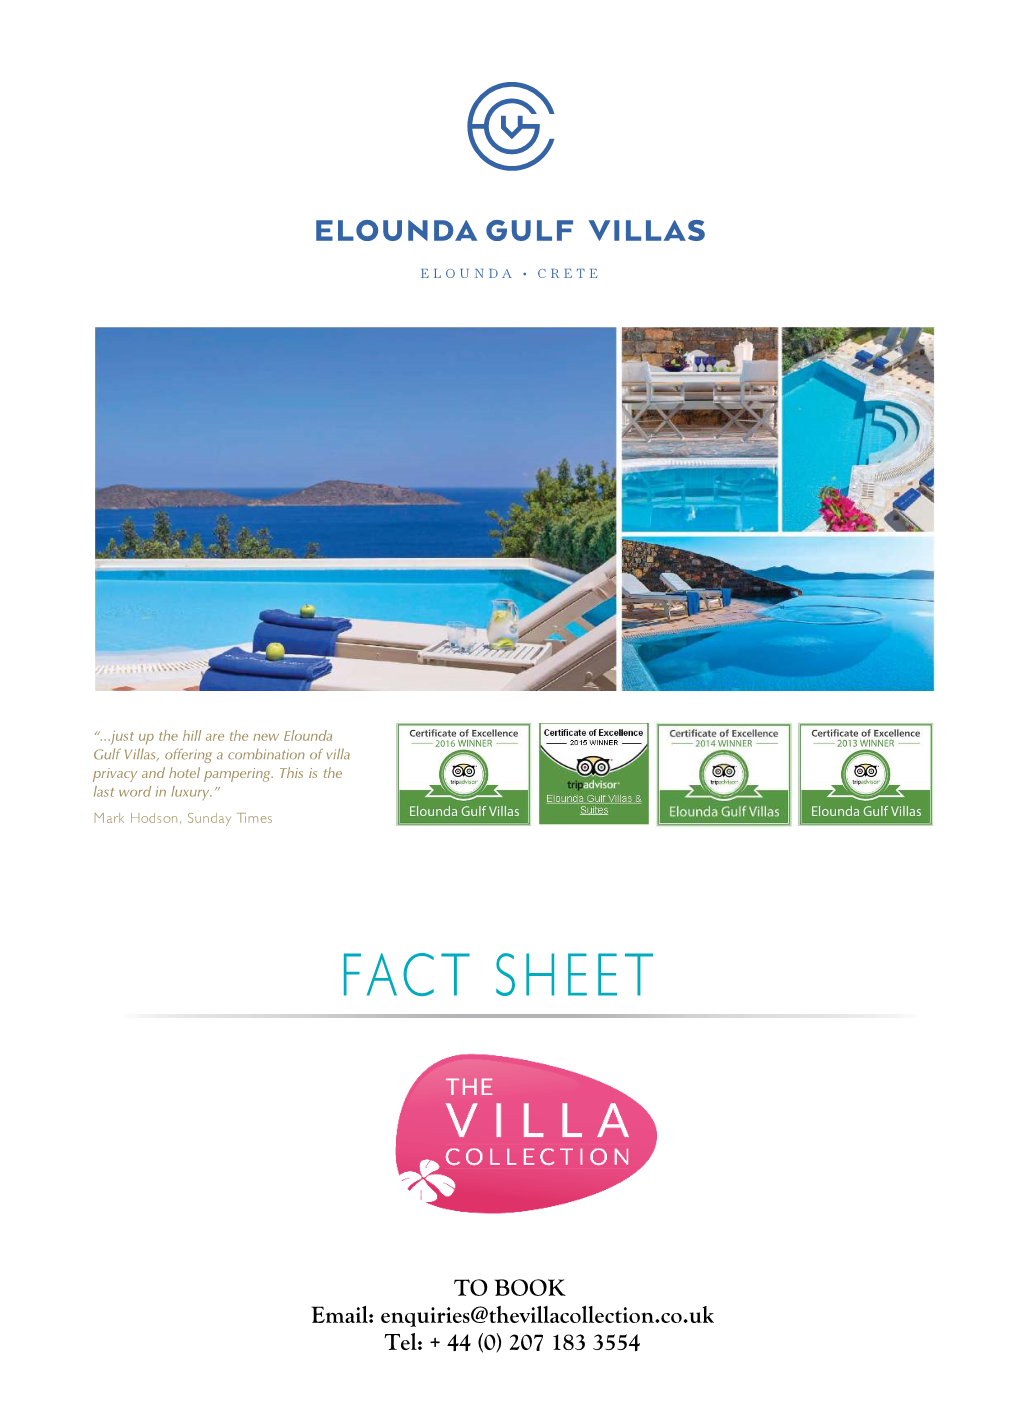 Download Elounda Gulf Villa Fact Sheet Here